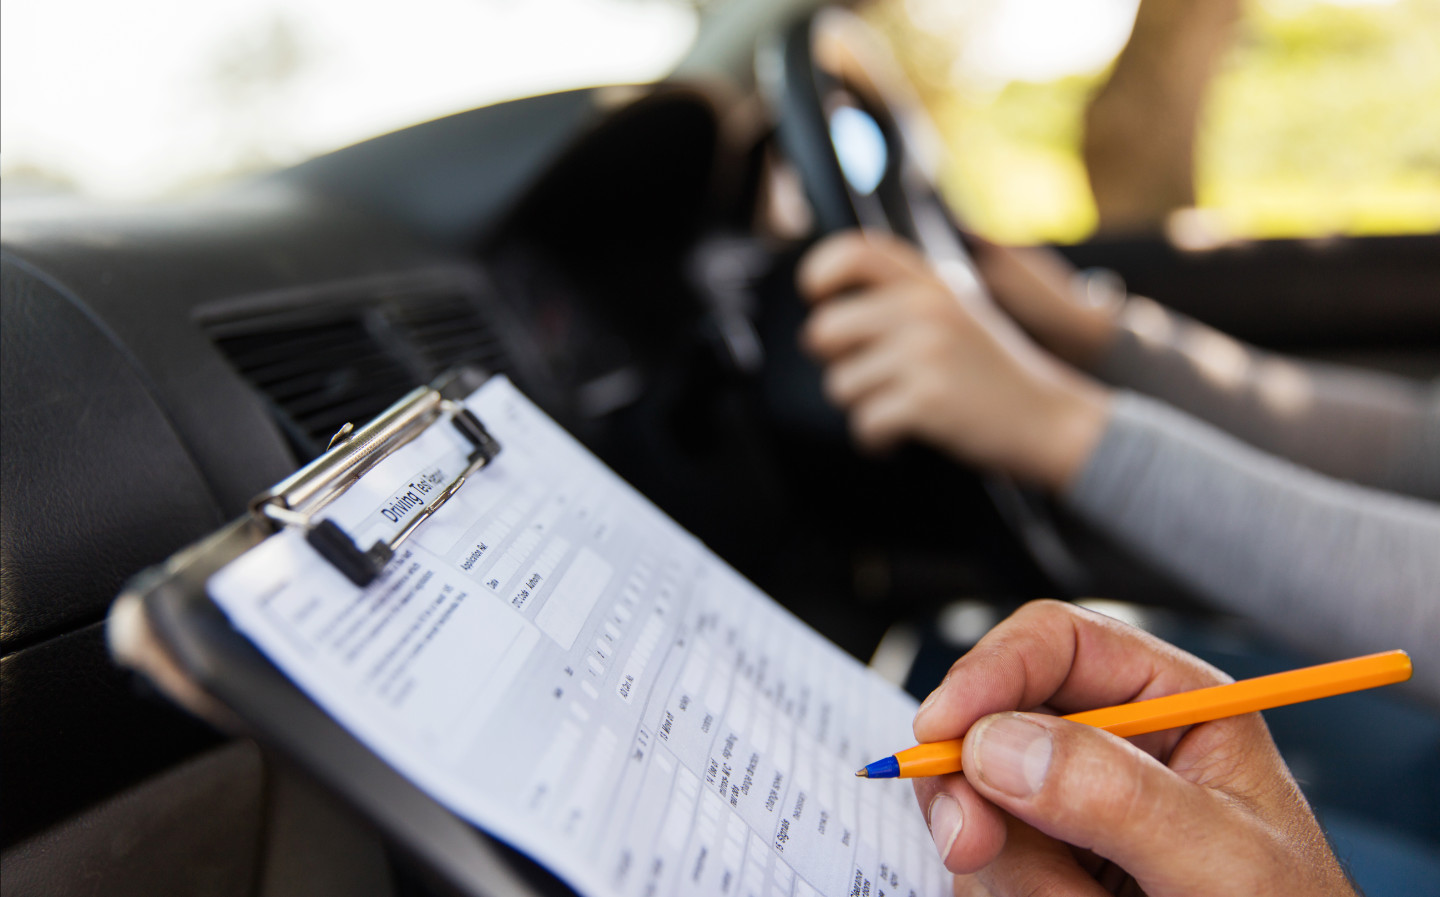 Learner drivers struggle to book tests amid backlog